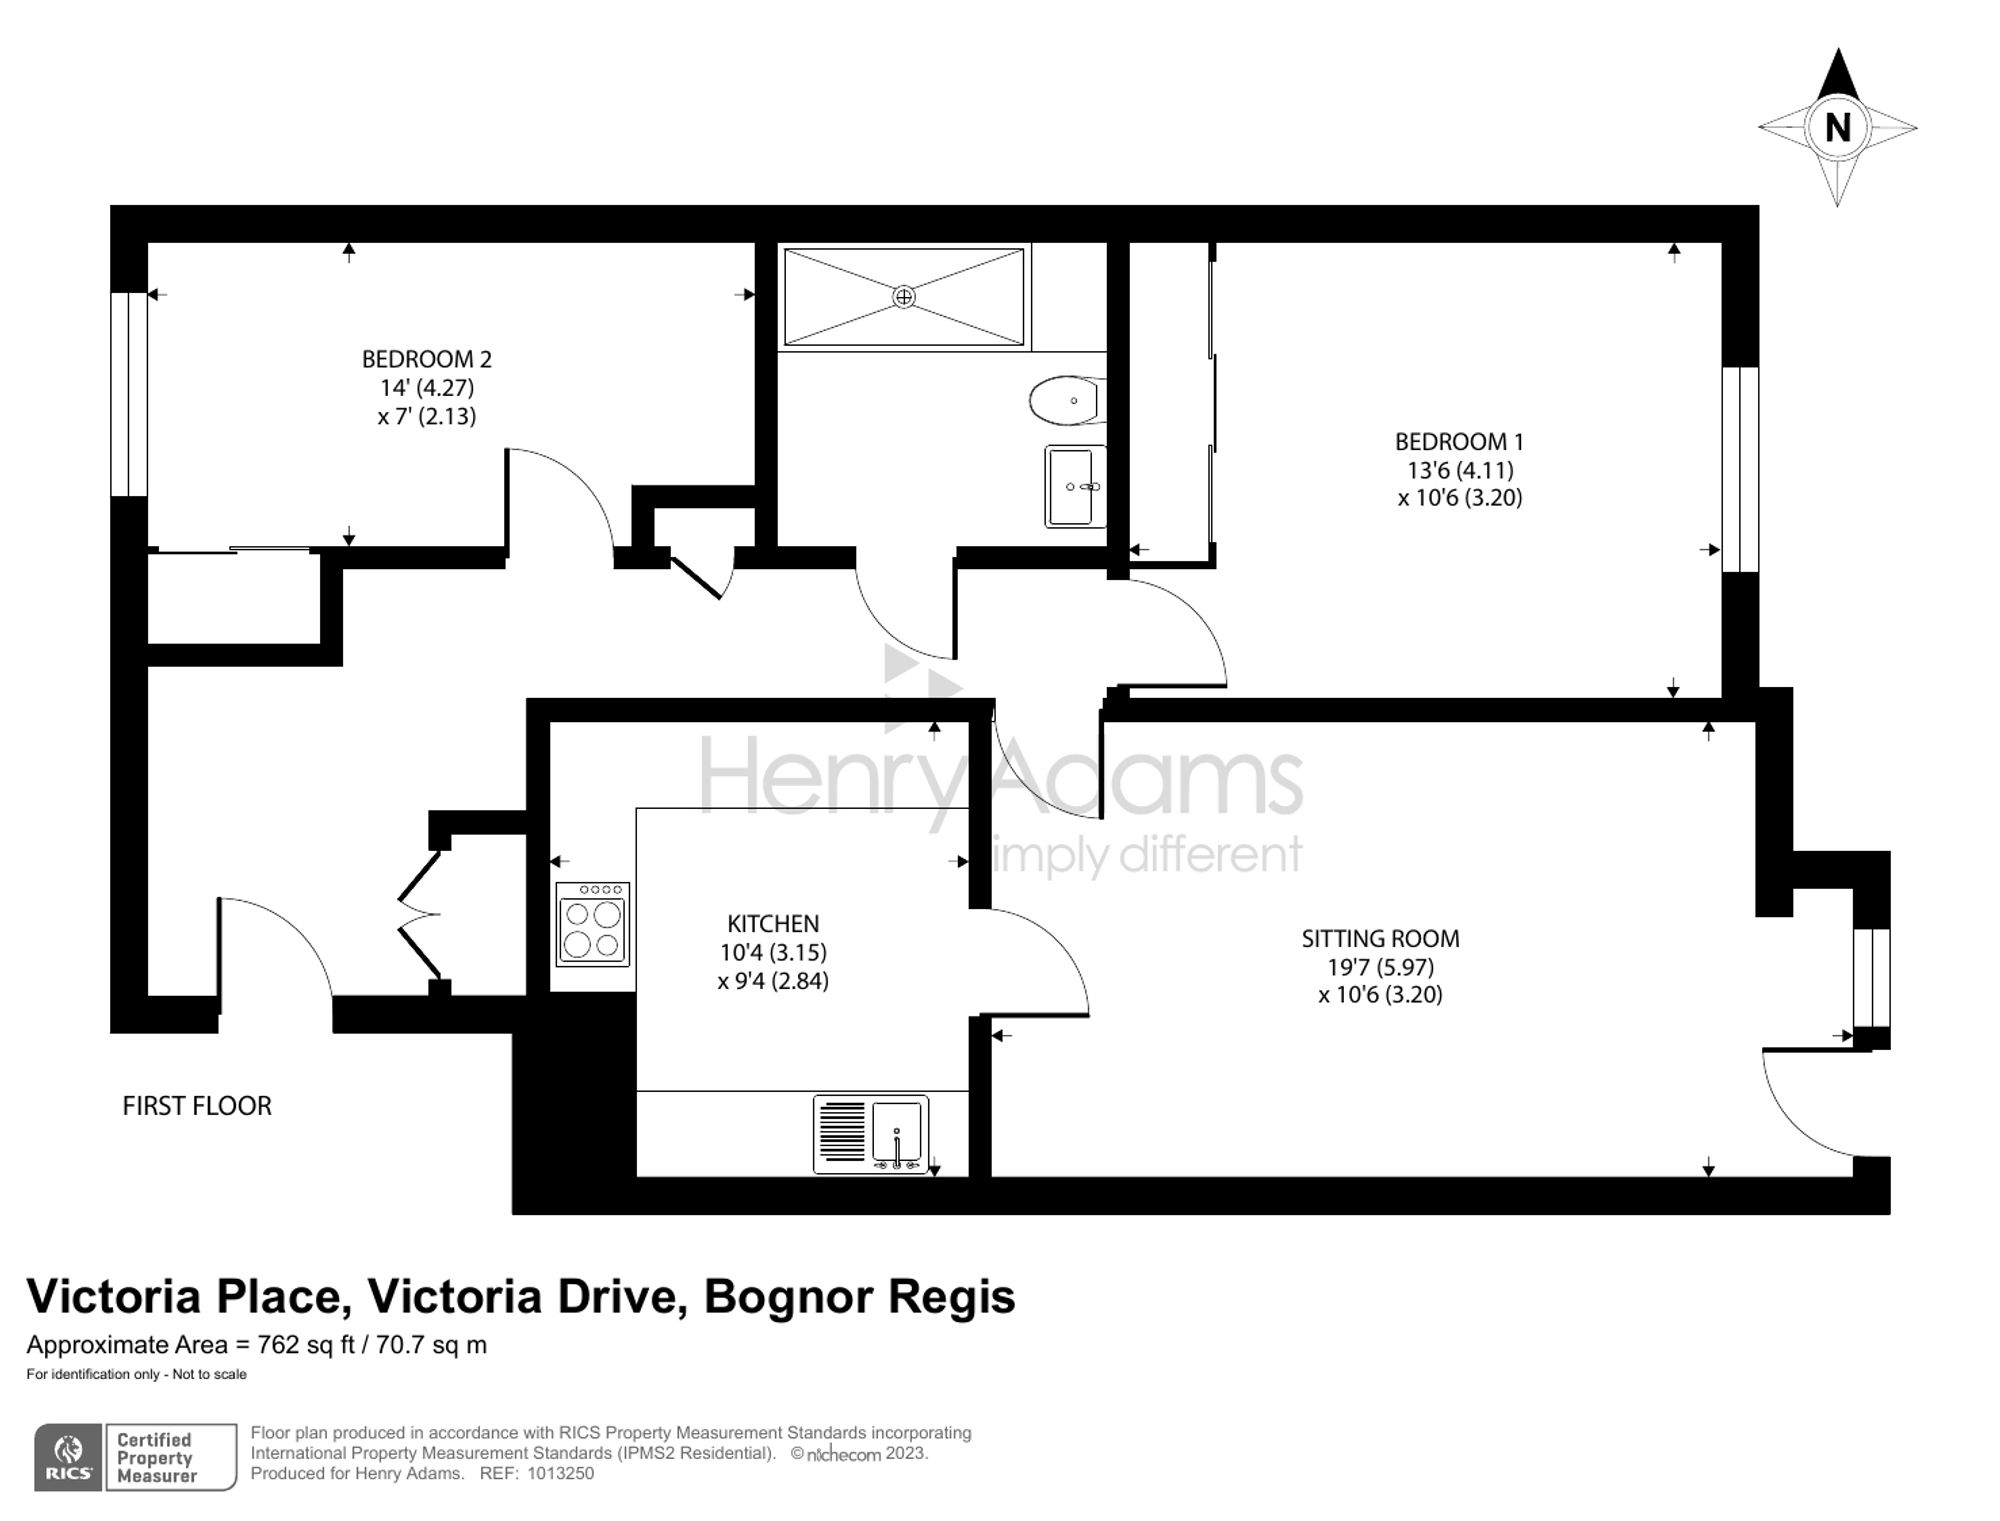 Victoria Place, Victoria Drive floorplans